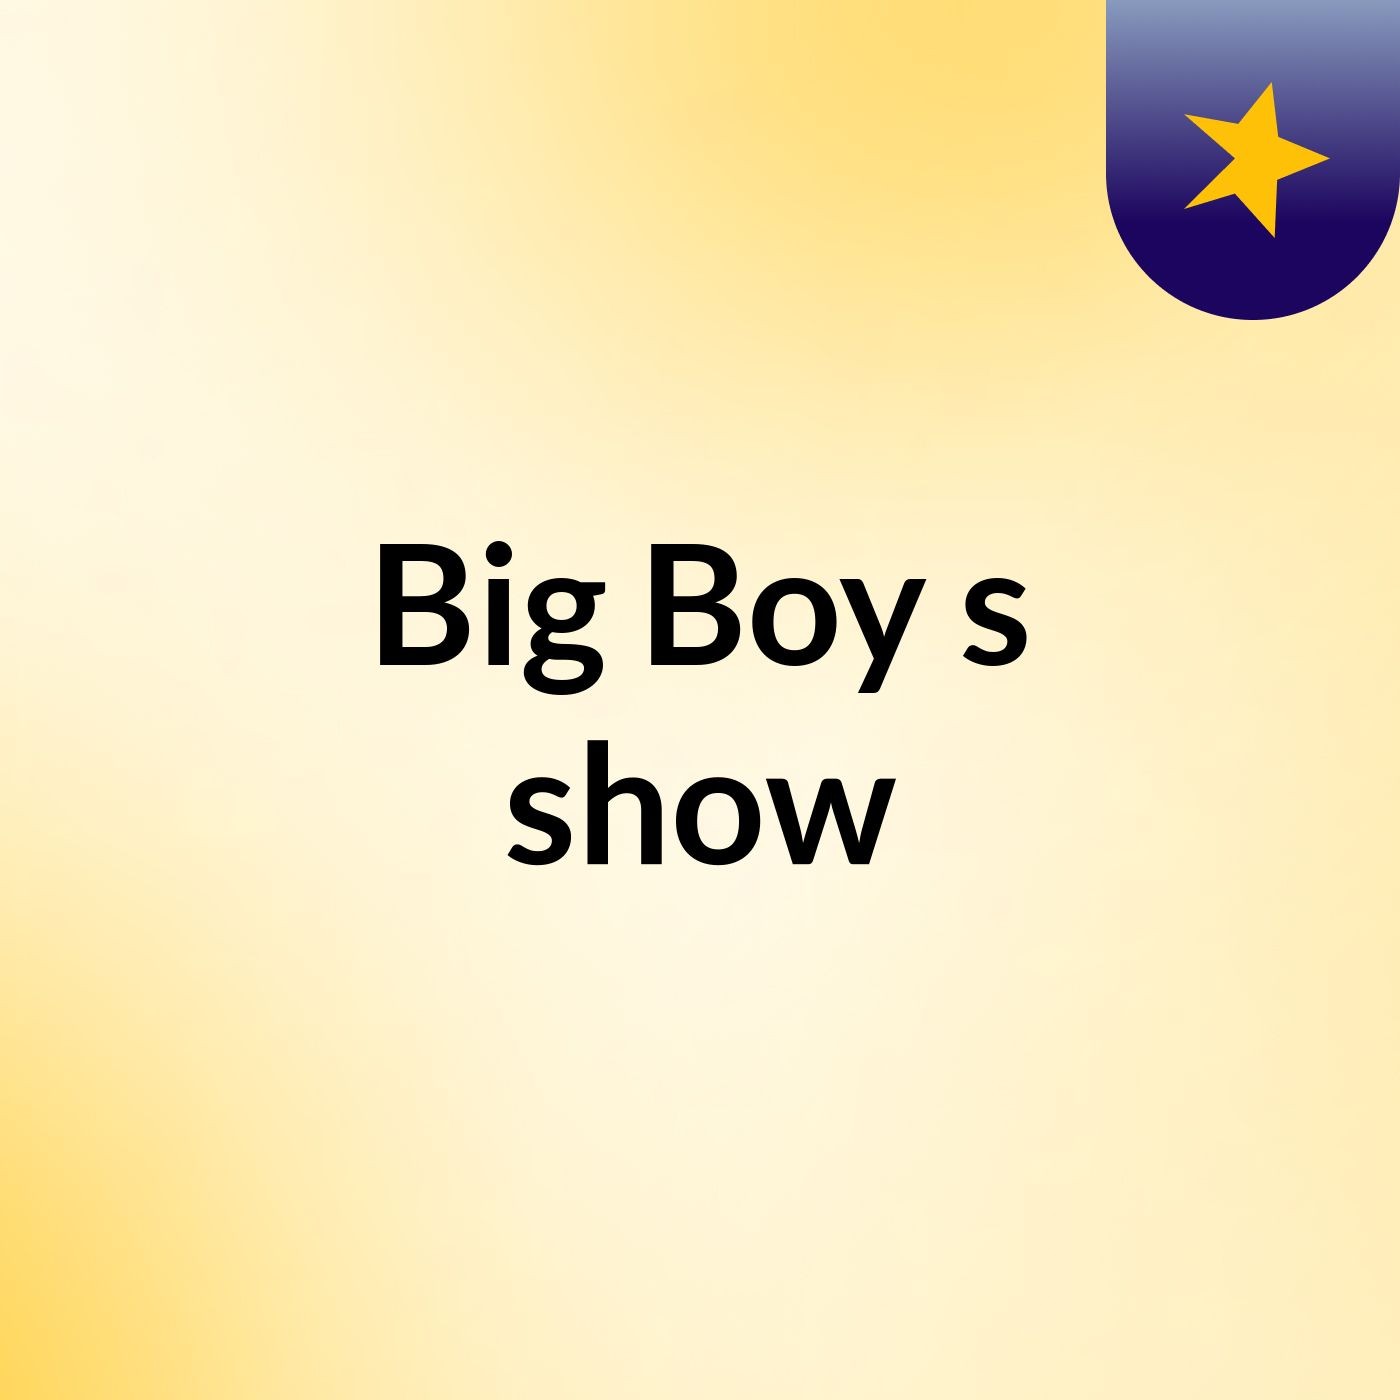 Big Boy's show